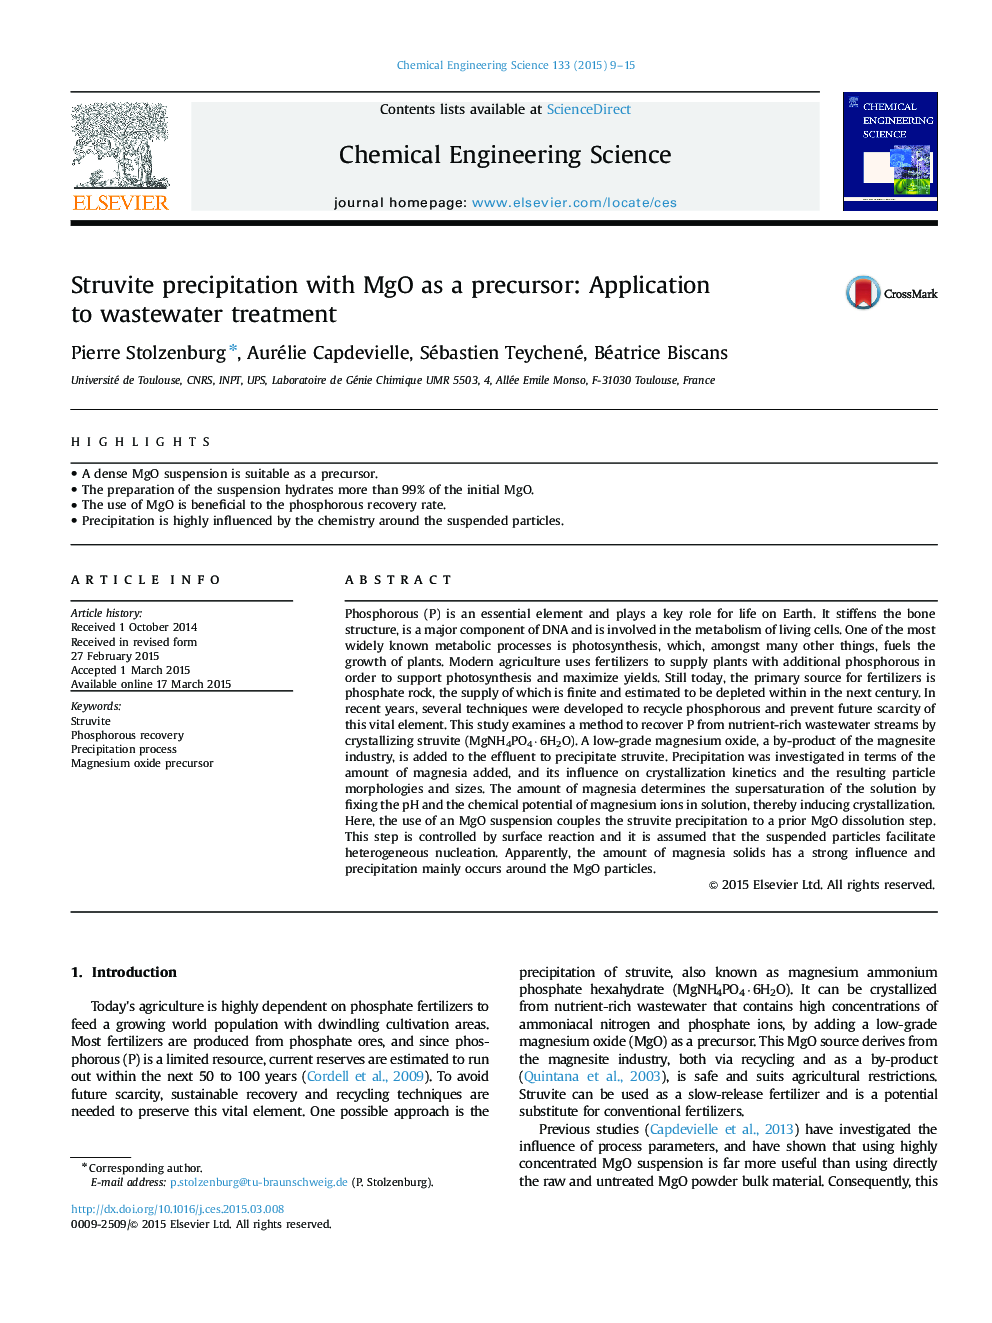 Struvite precipitation with MgO as a precursor: Application to wastewater treatment